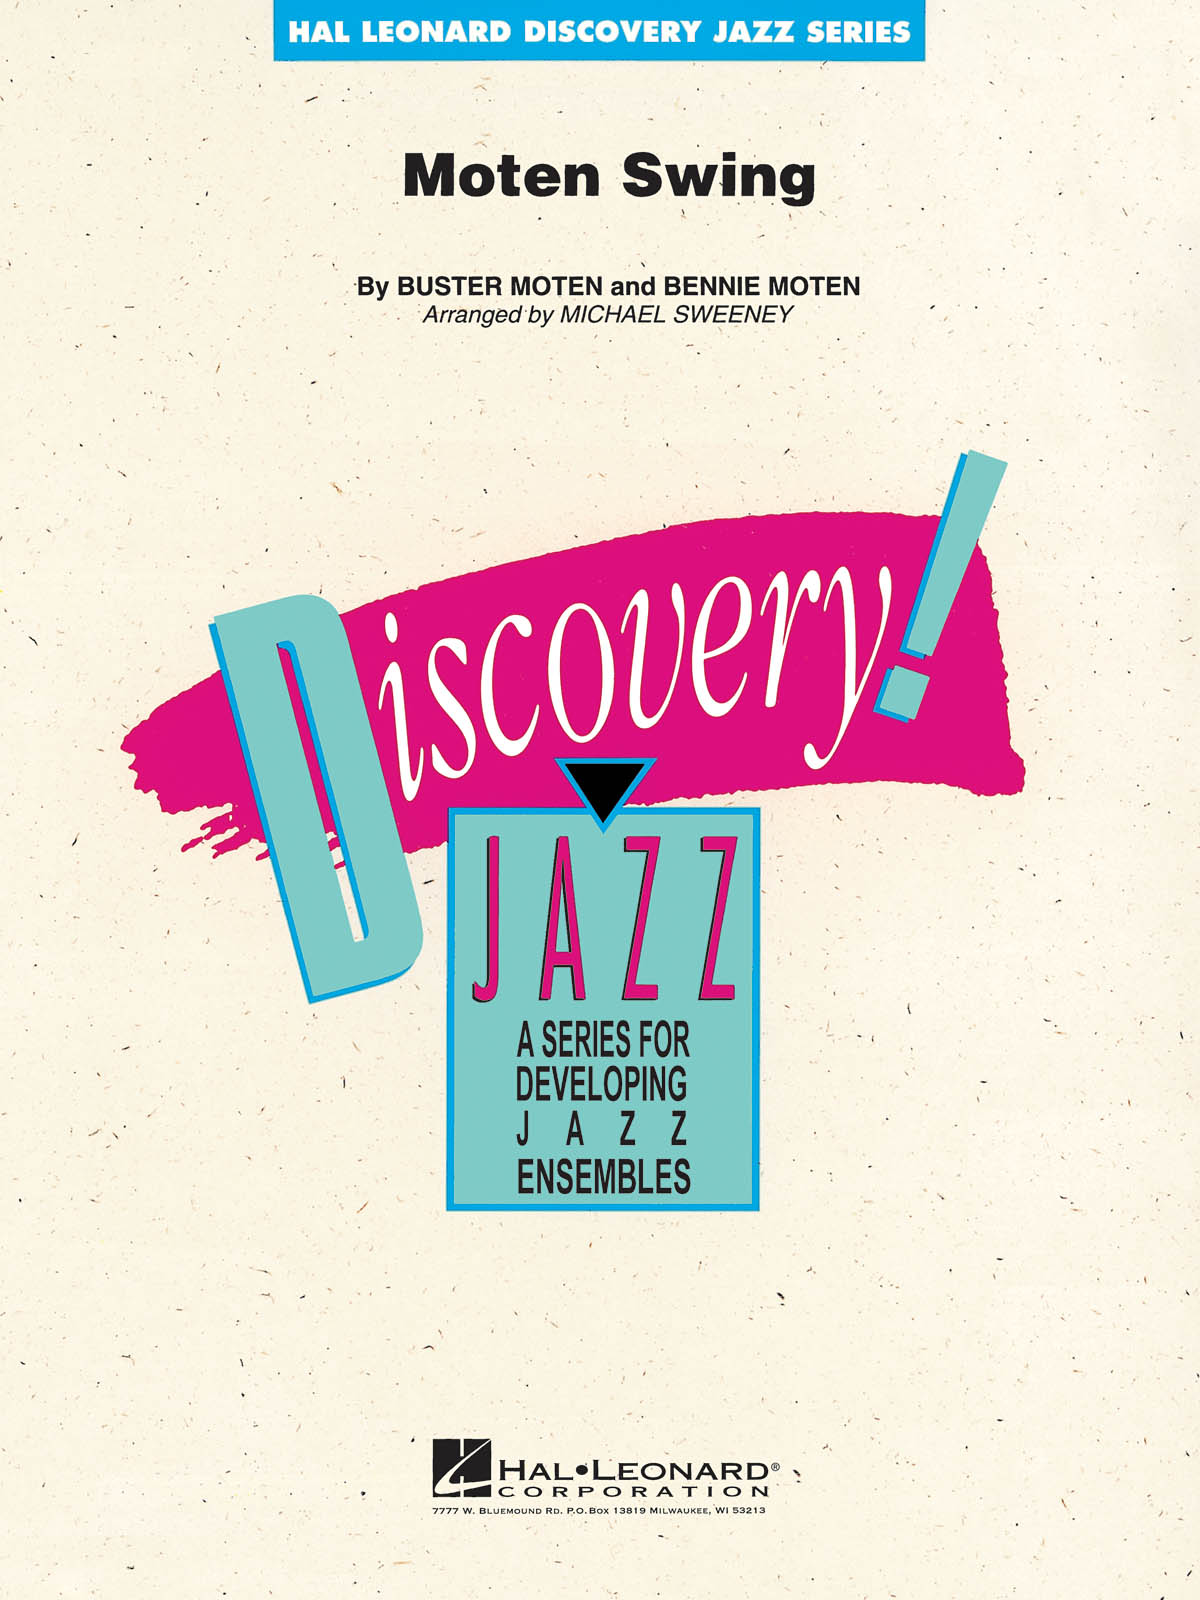 Moten Swing(Discovery Jazz)